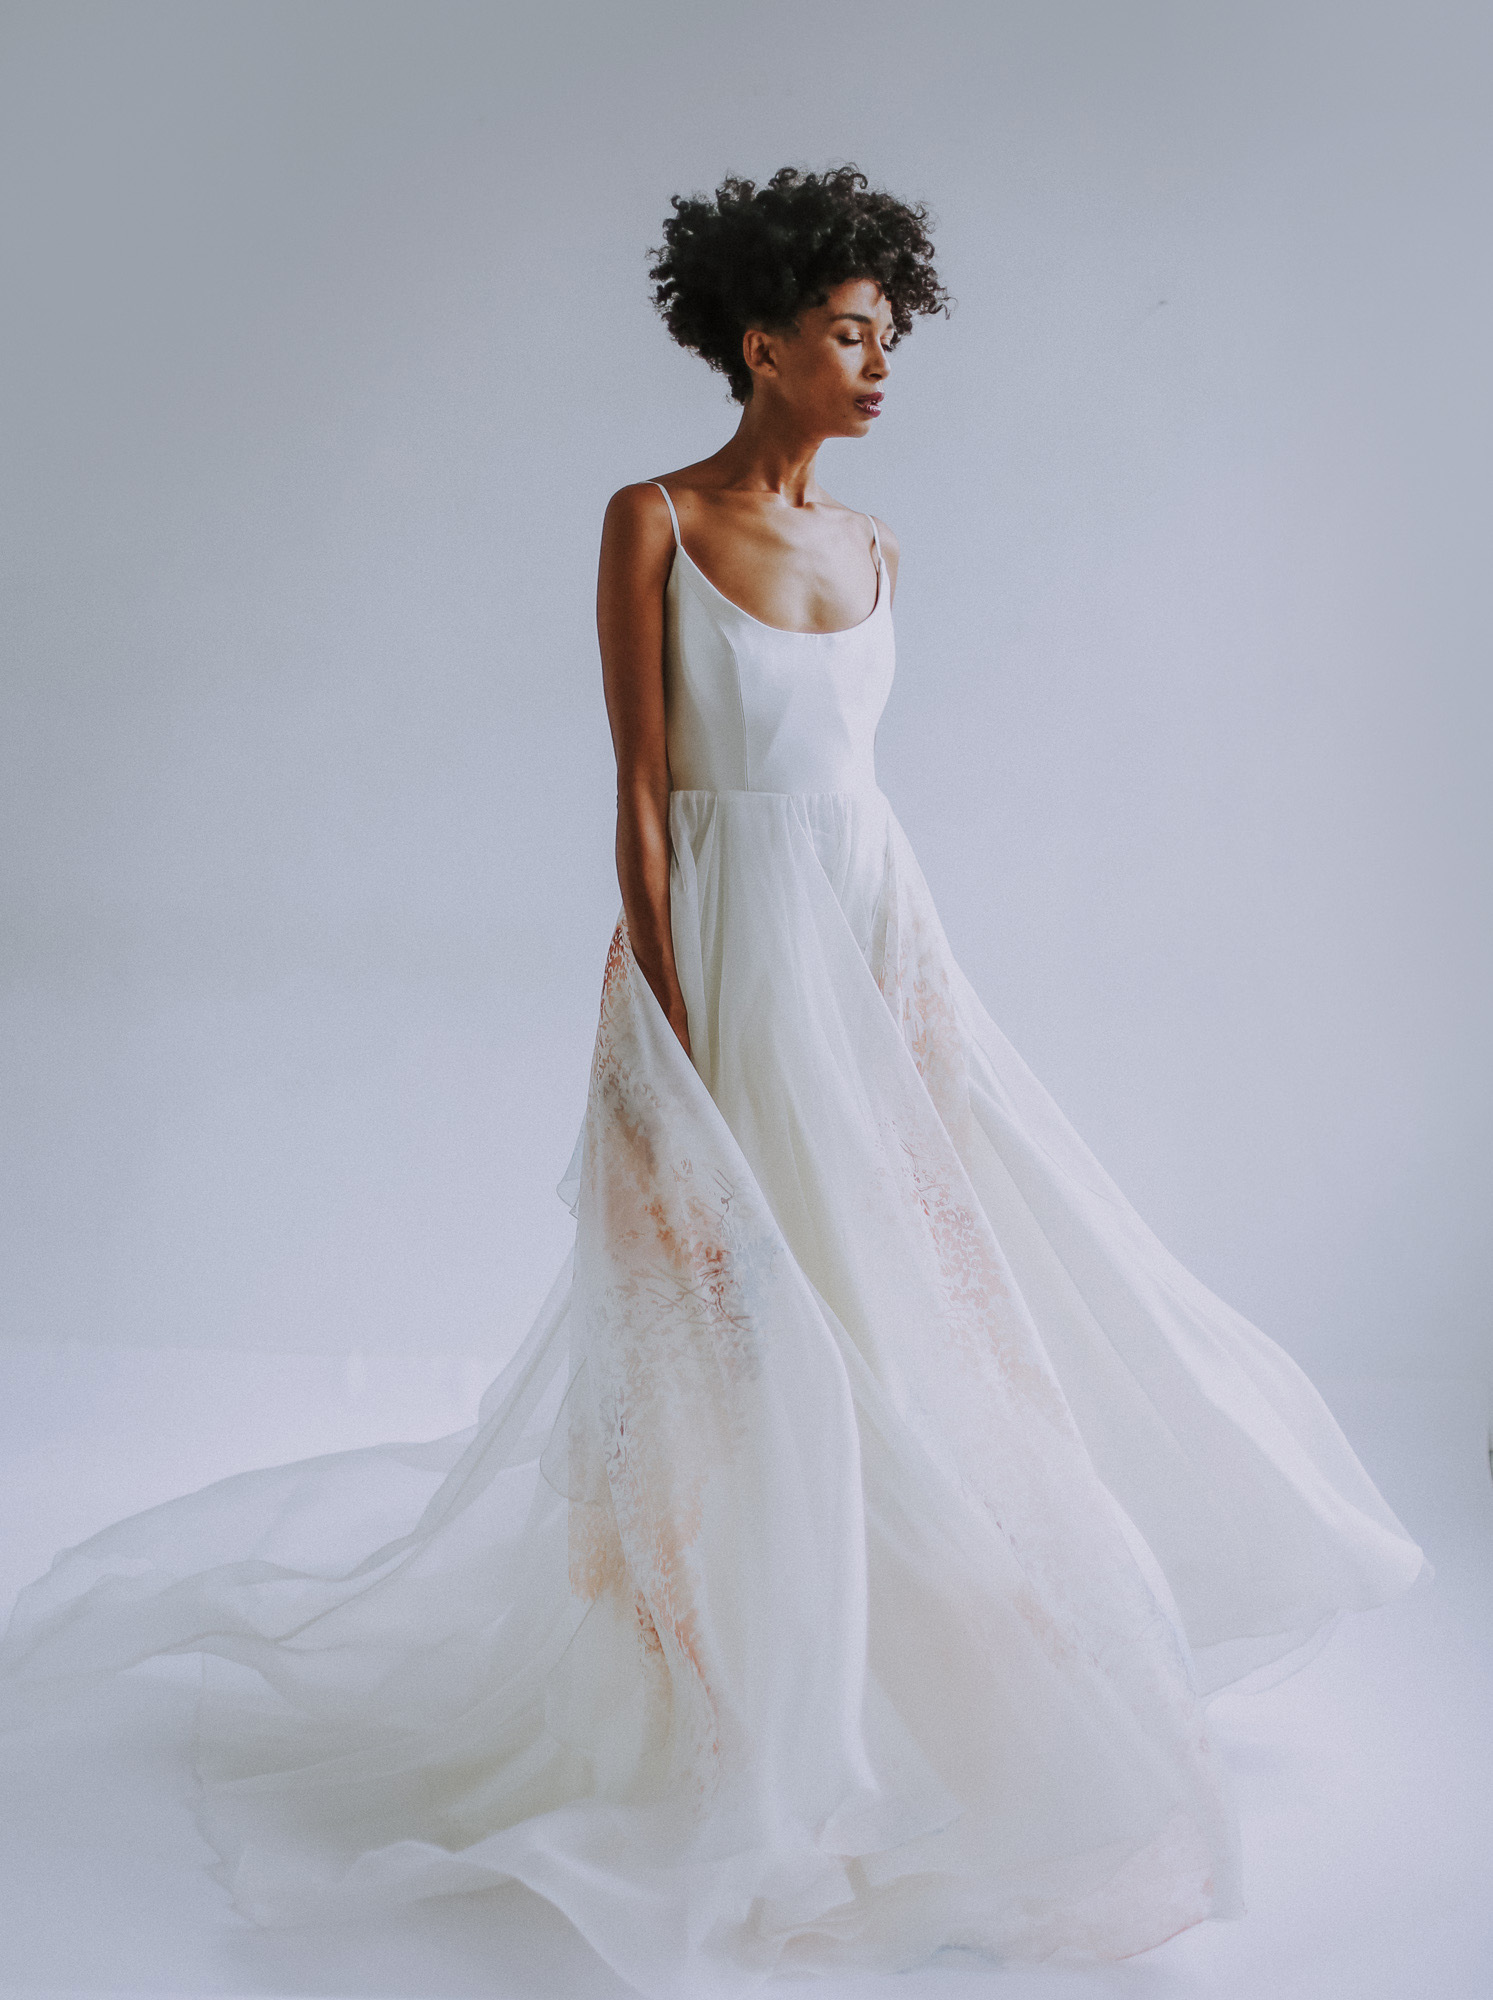 leanne-marshall-wedding-gown-7.jpg